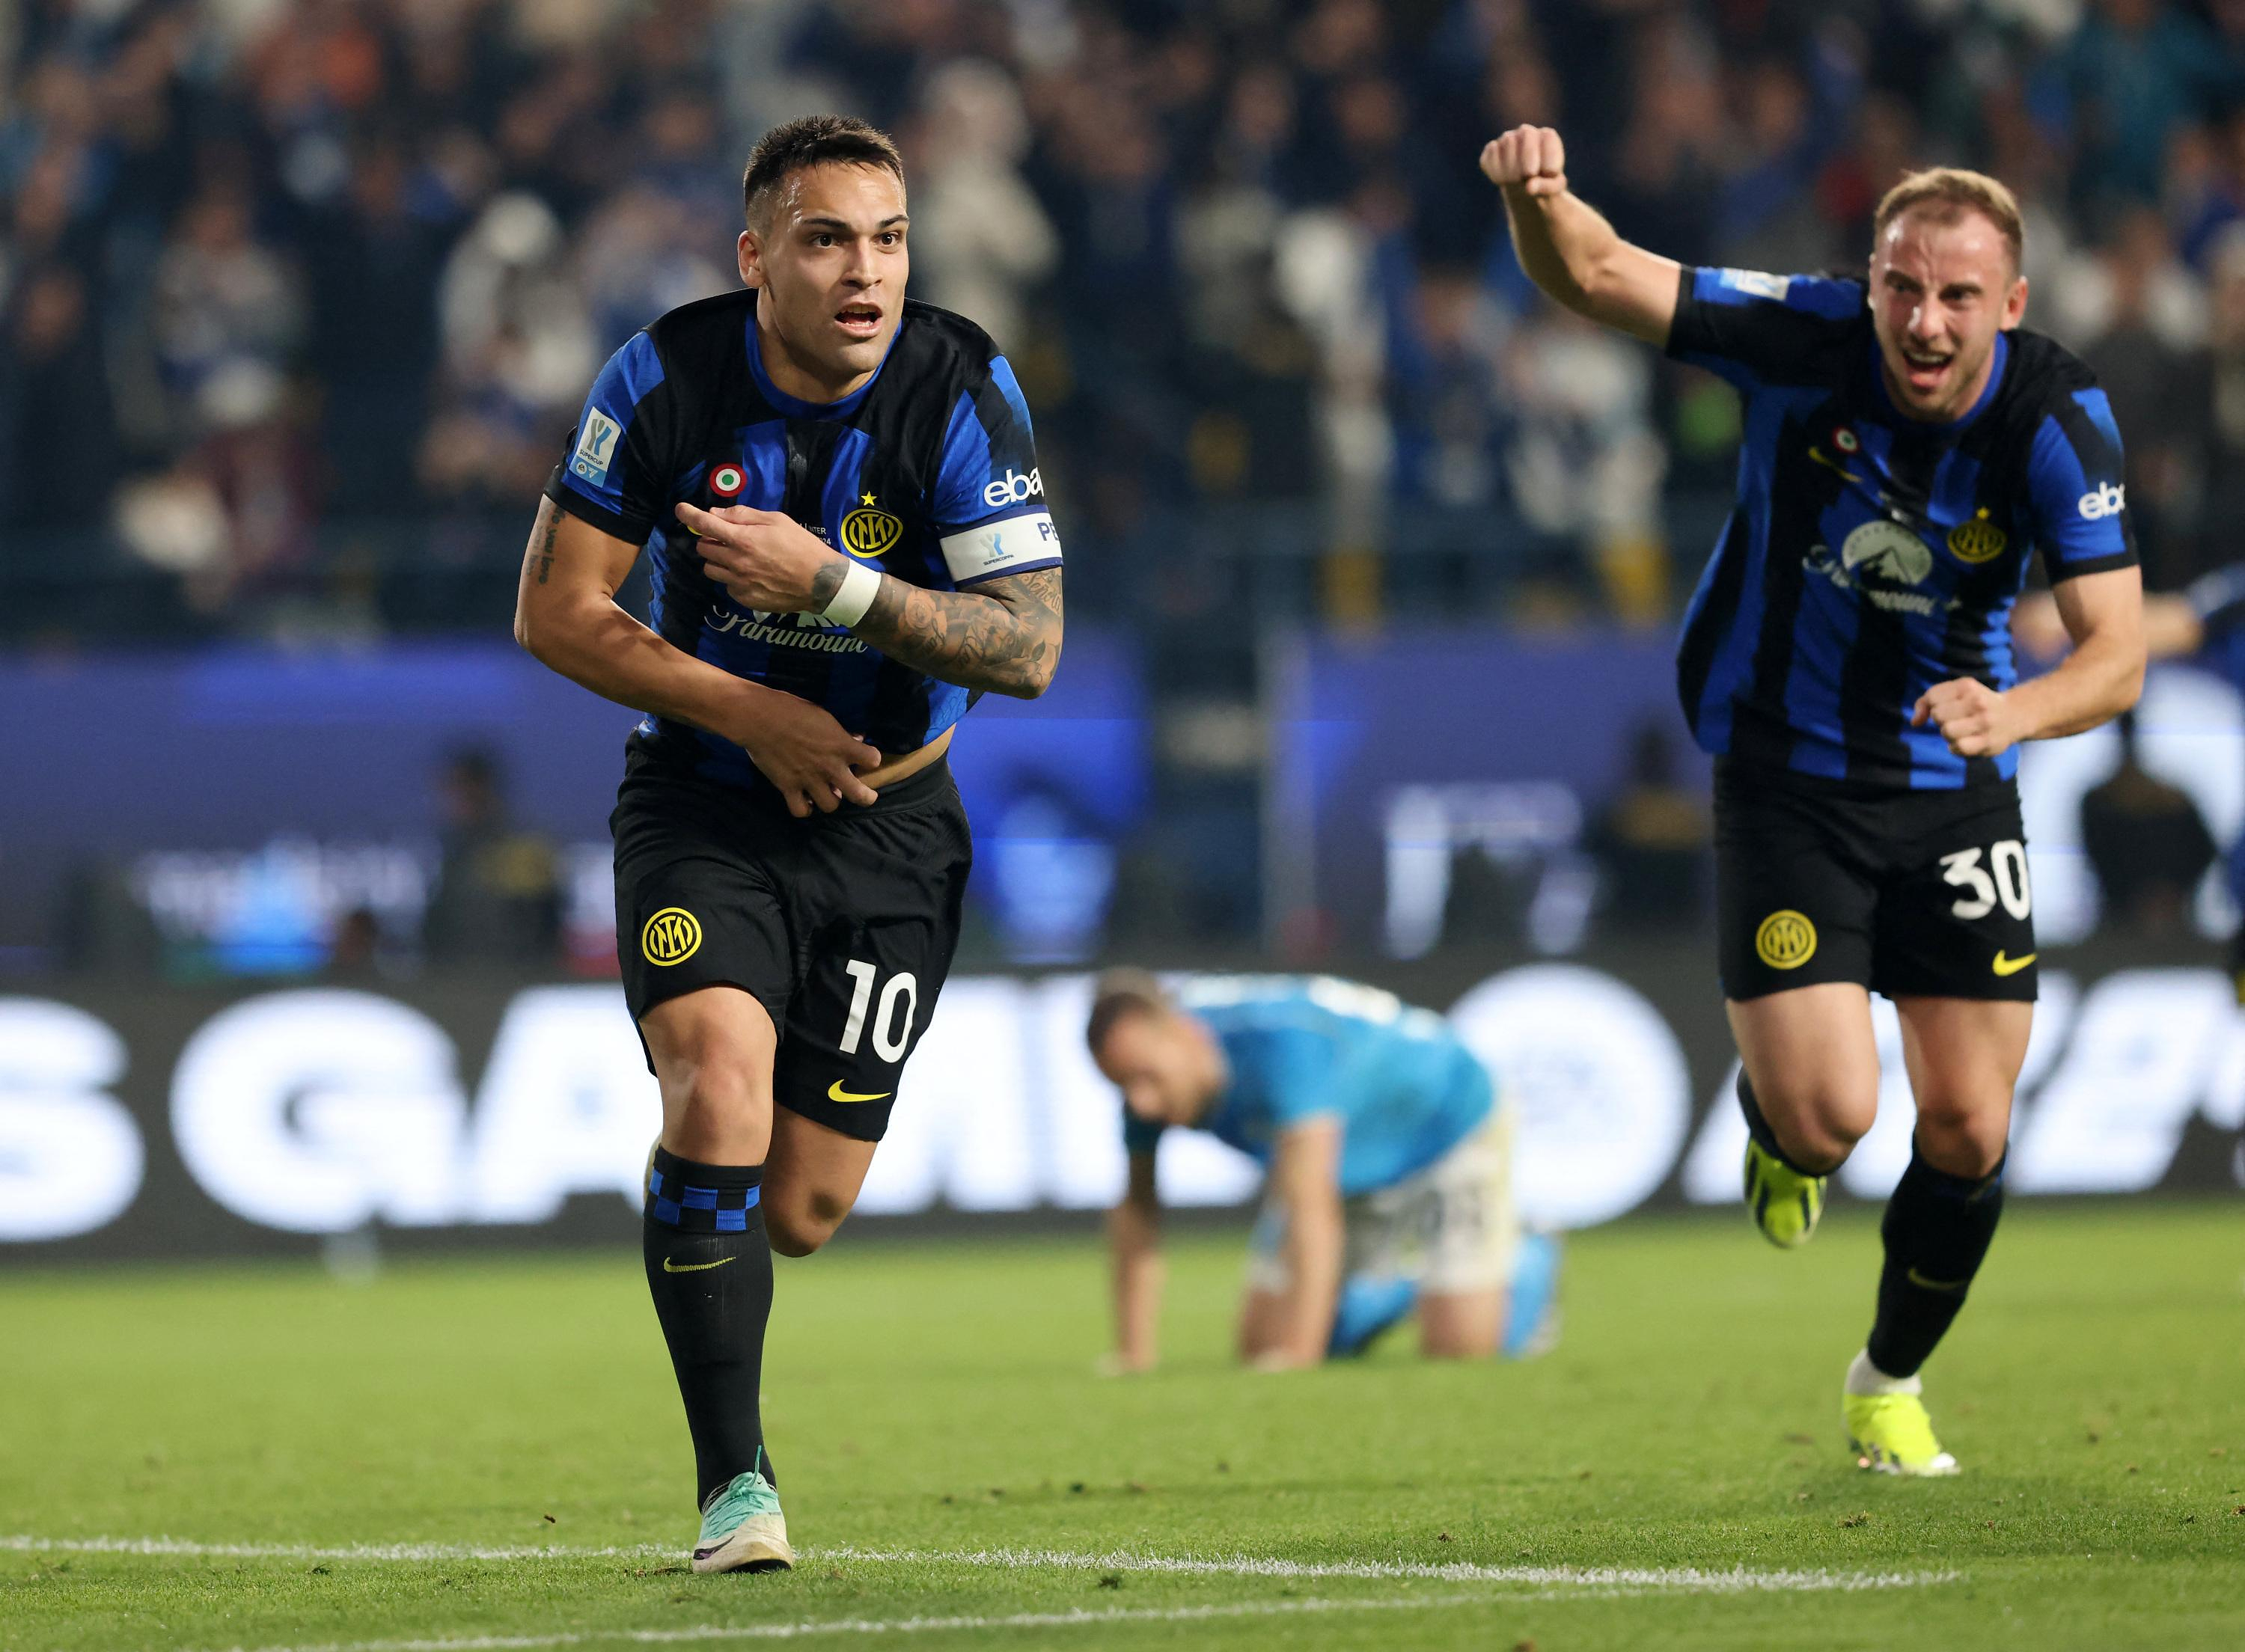 Italian Super Cup: Inter Milan tames Napoli and makes it three